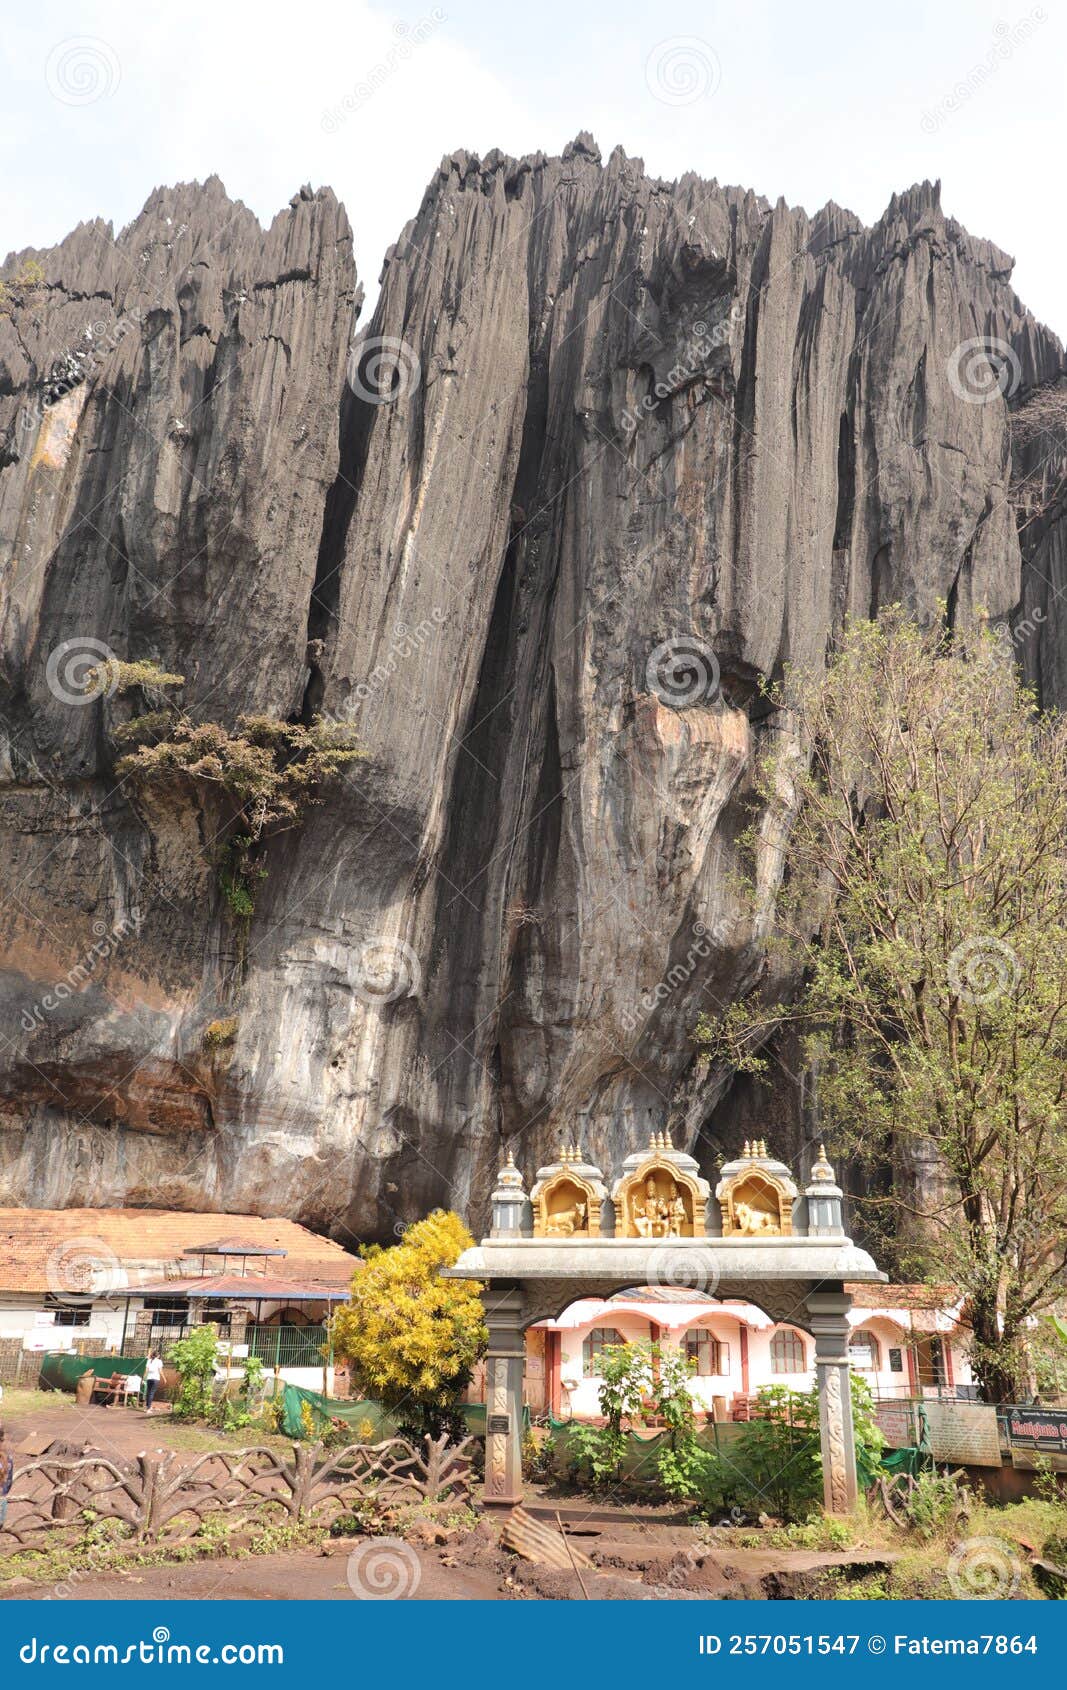 yana caves and temple - karnataka tourism - india adventure trip - hindu mythology